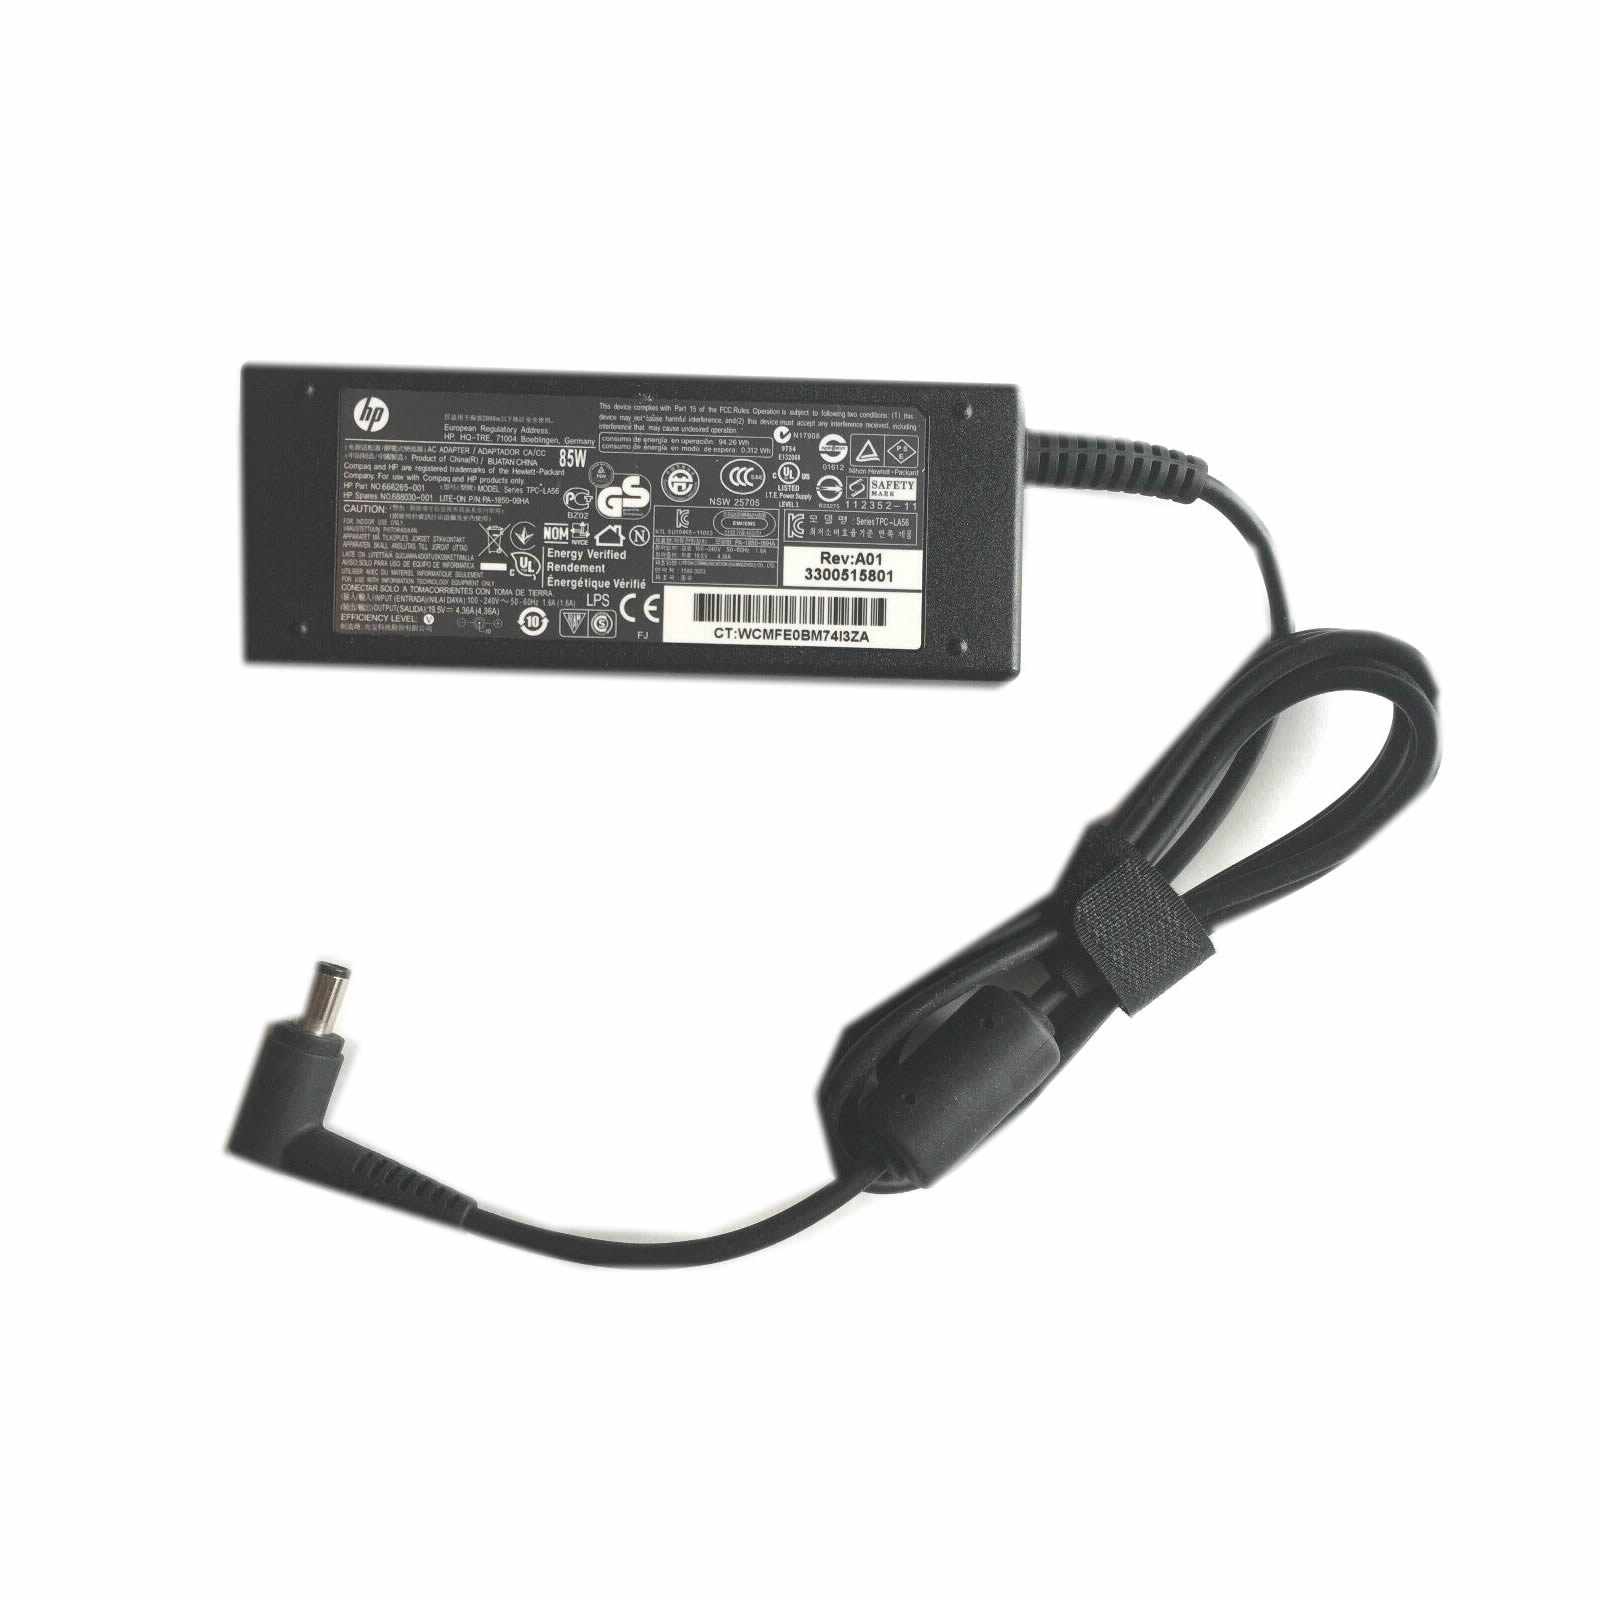 708993-001 laptop ac adapter